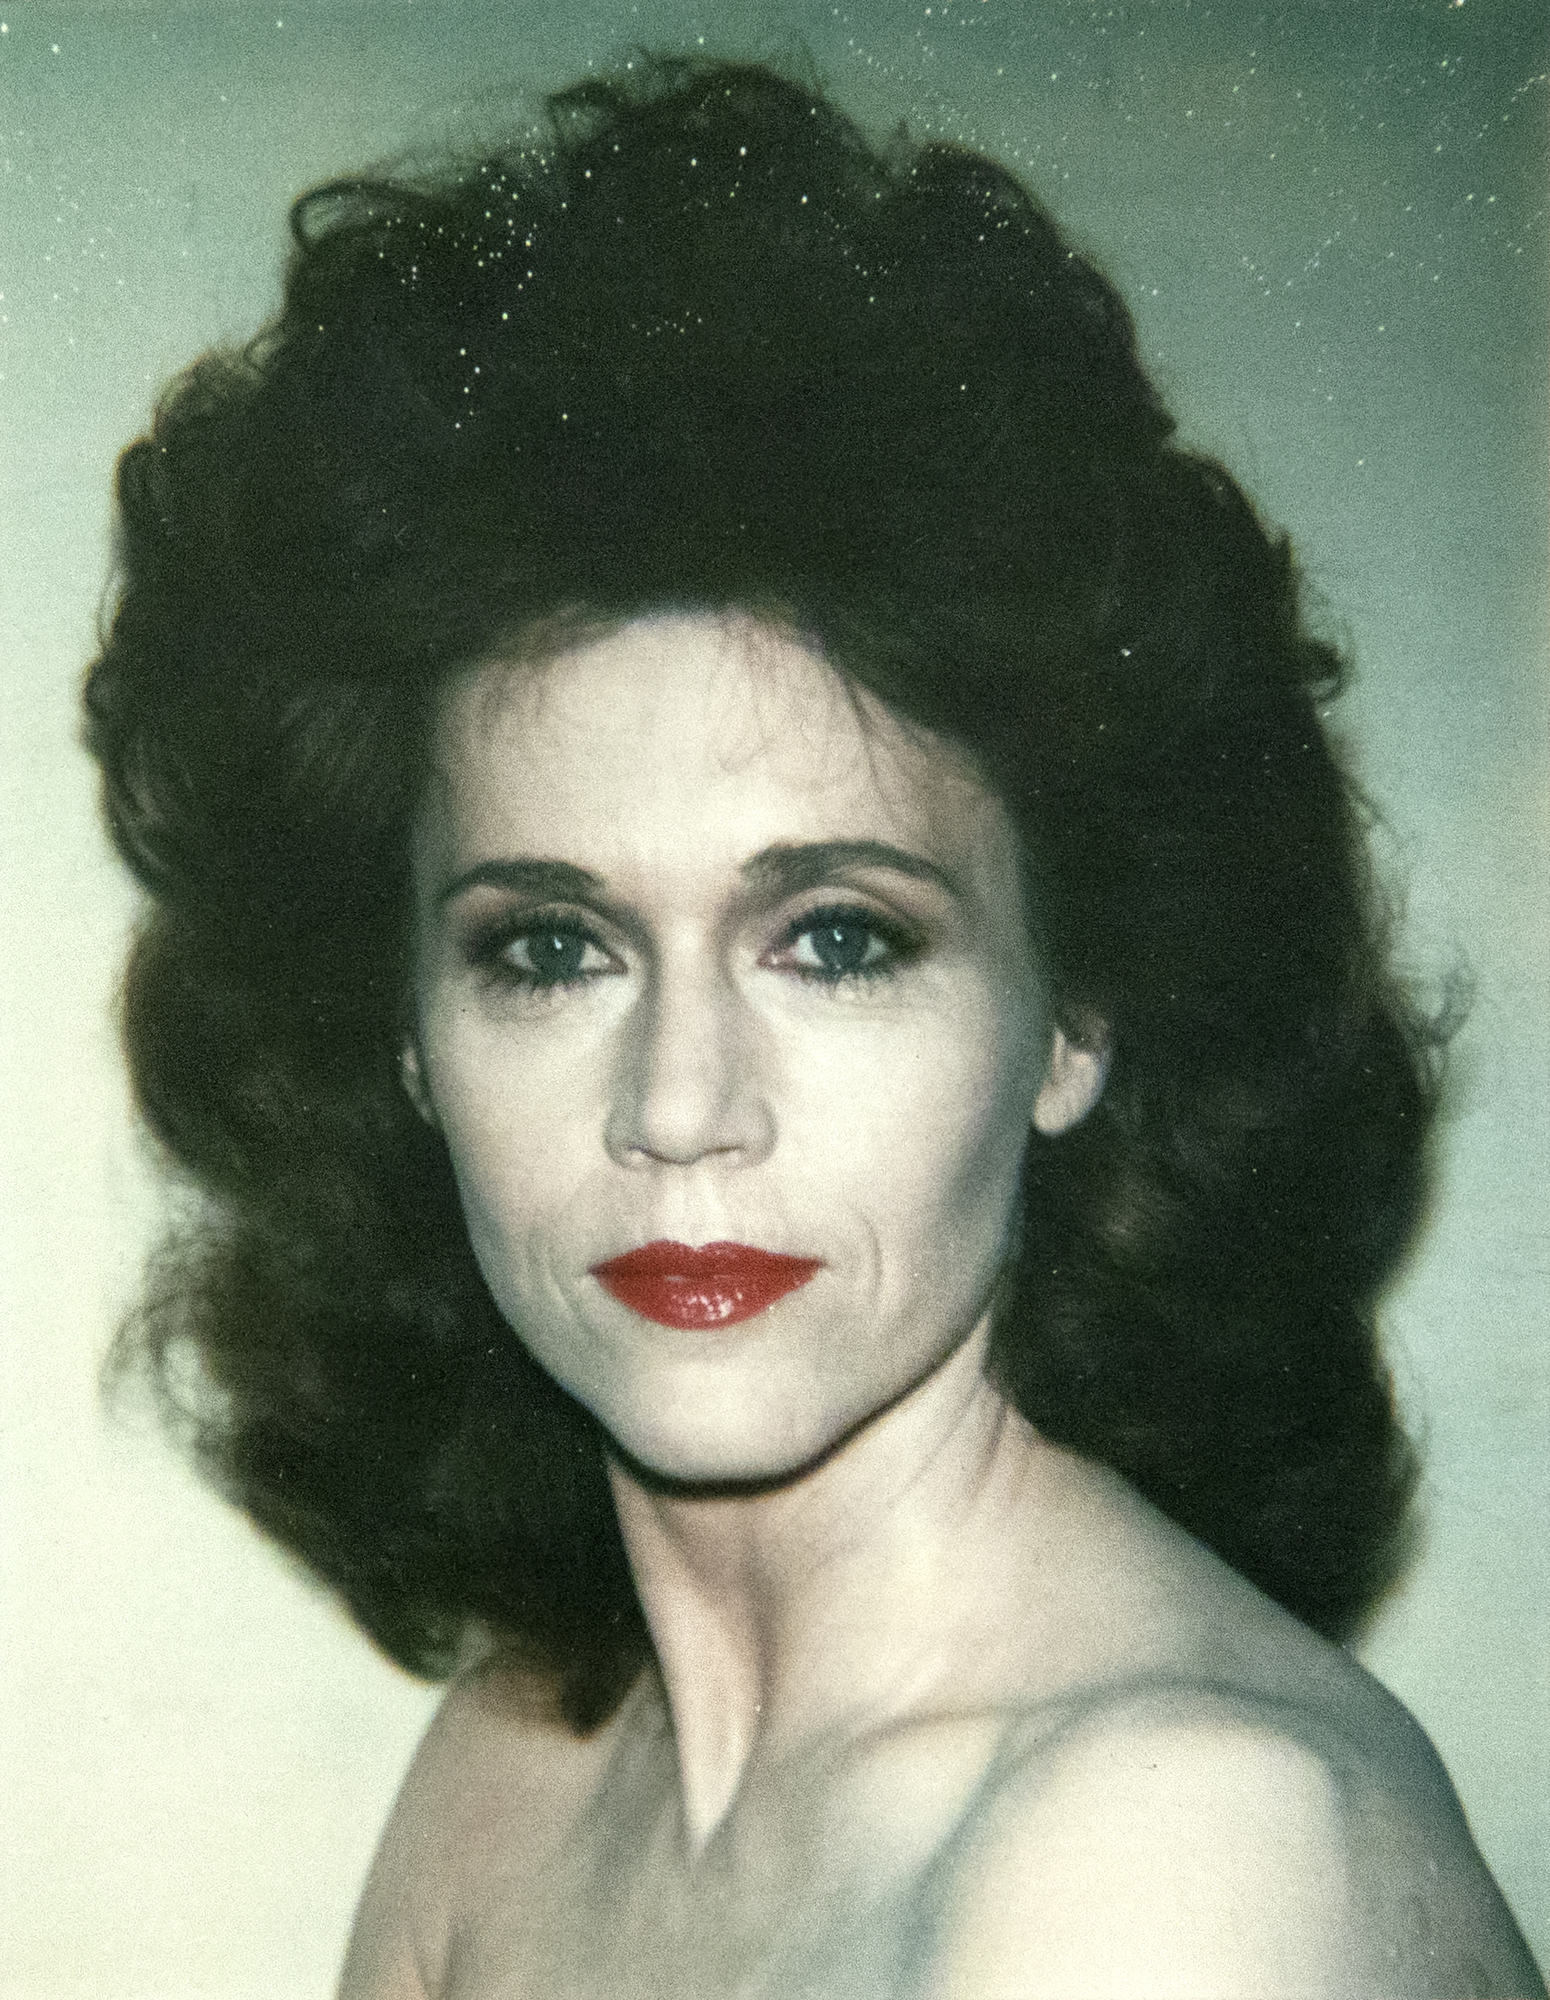 ANDY WARHOL - Jane Fonda - Polaroid, Polacolor - 4 1/4 x 3 3/8 in.